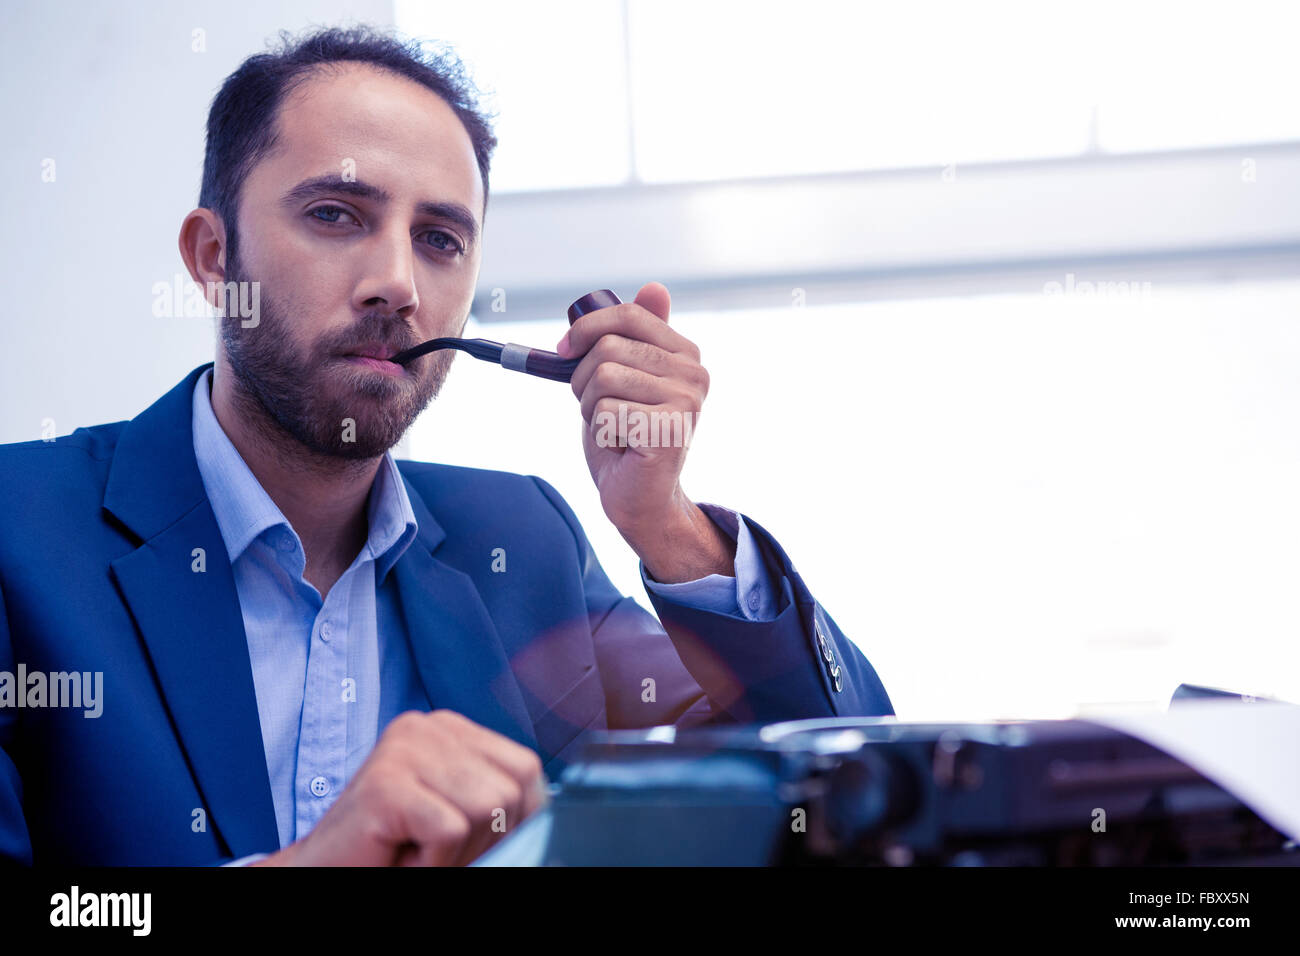 Portrait of businessman using typewriter while holding smoking pipe Stock Photo